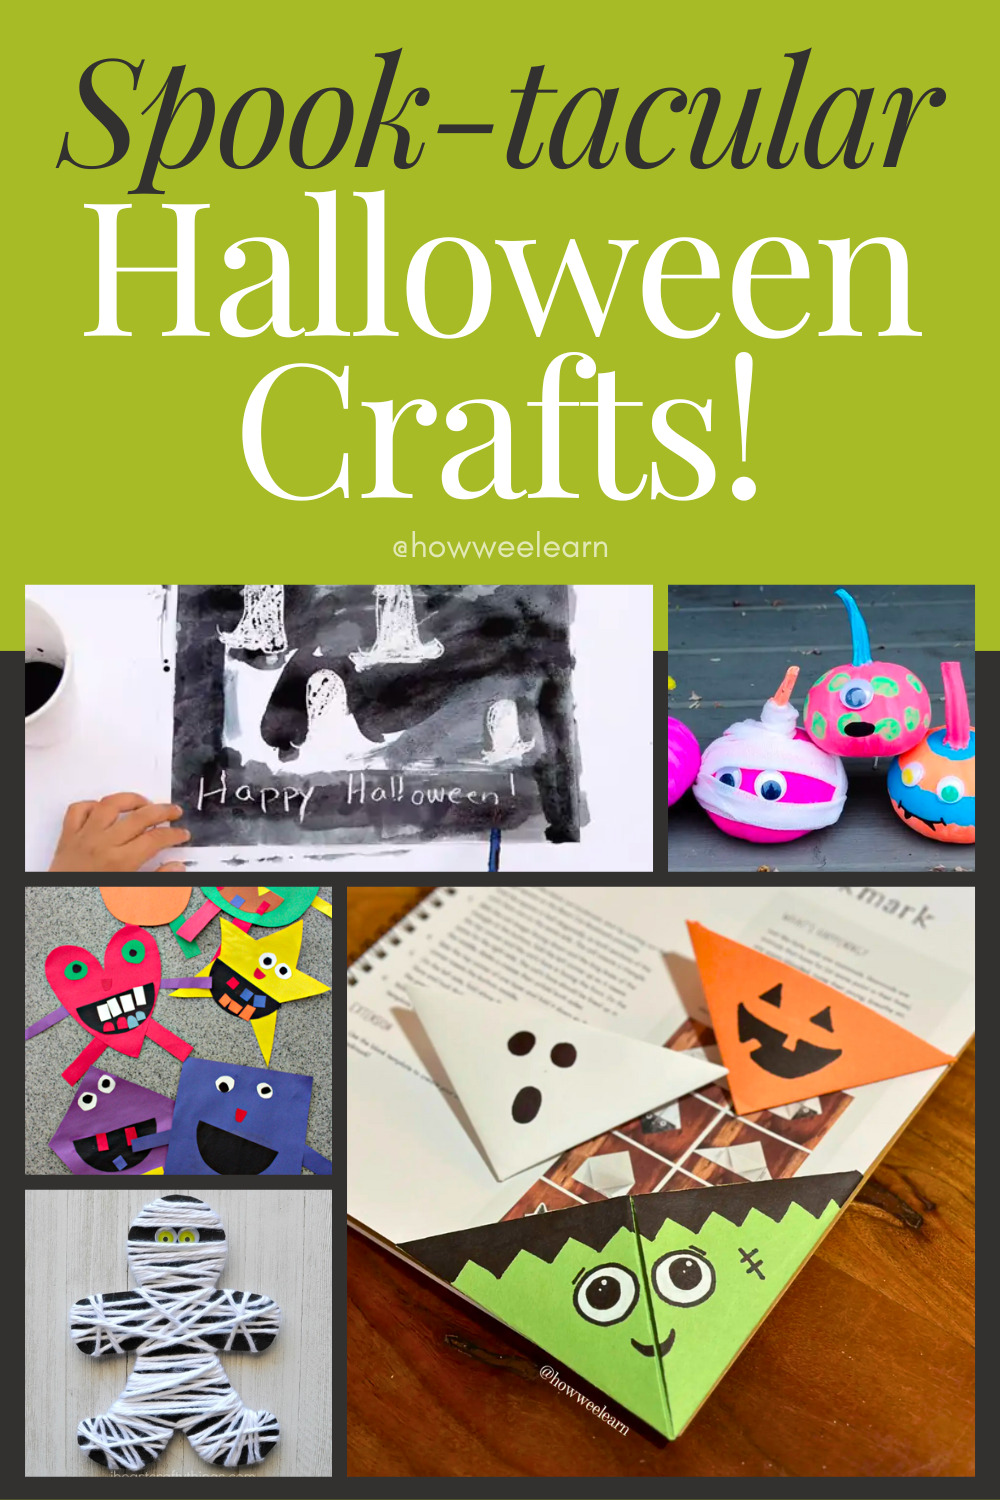 https://www.howweelearn.com/wp-content/uploads/2022/10/Spook-tacular-Halloween-Crafts.jpg